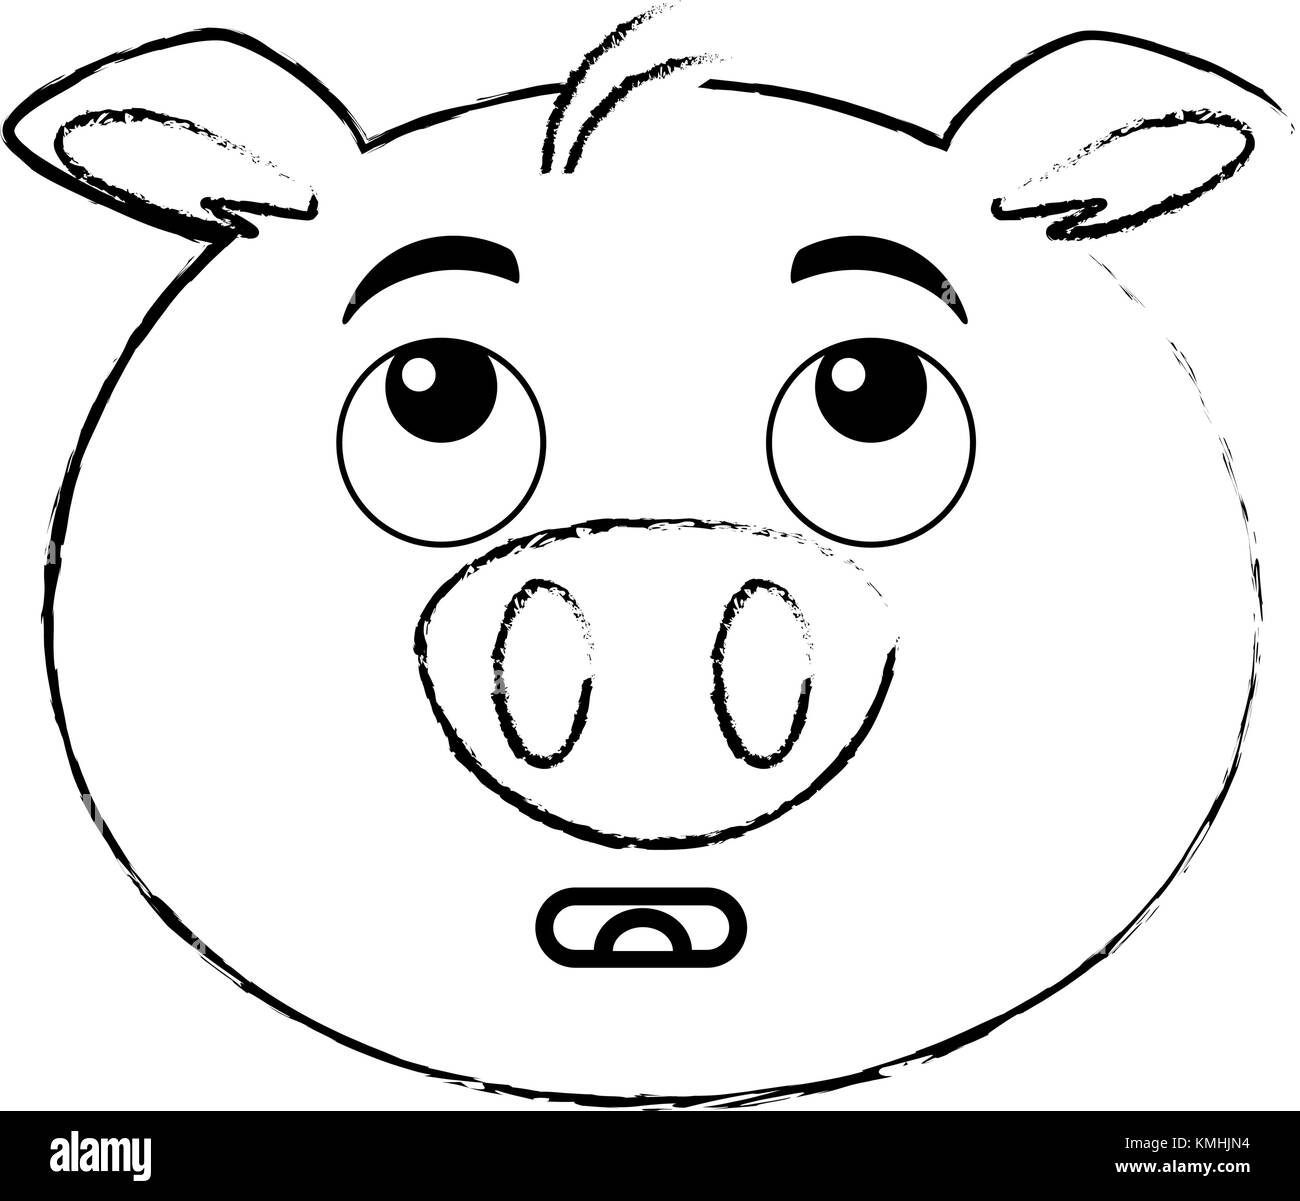 terrified pig emoji kawaii Stock Vector